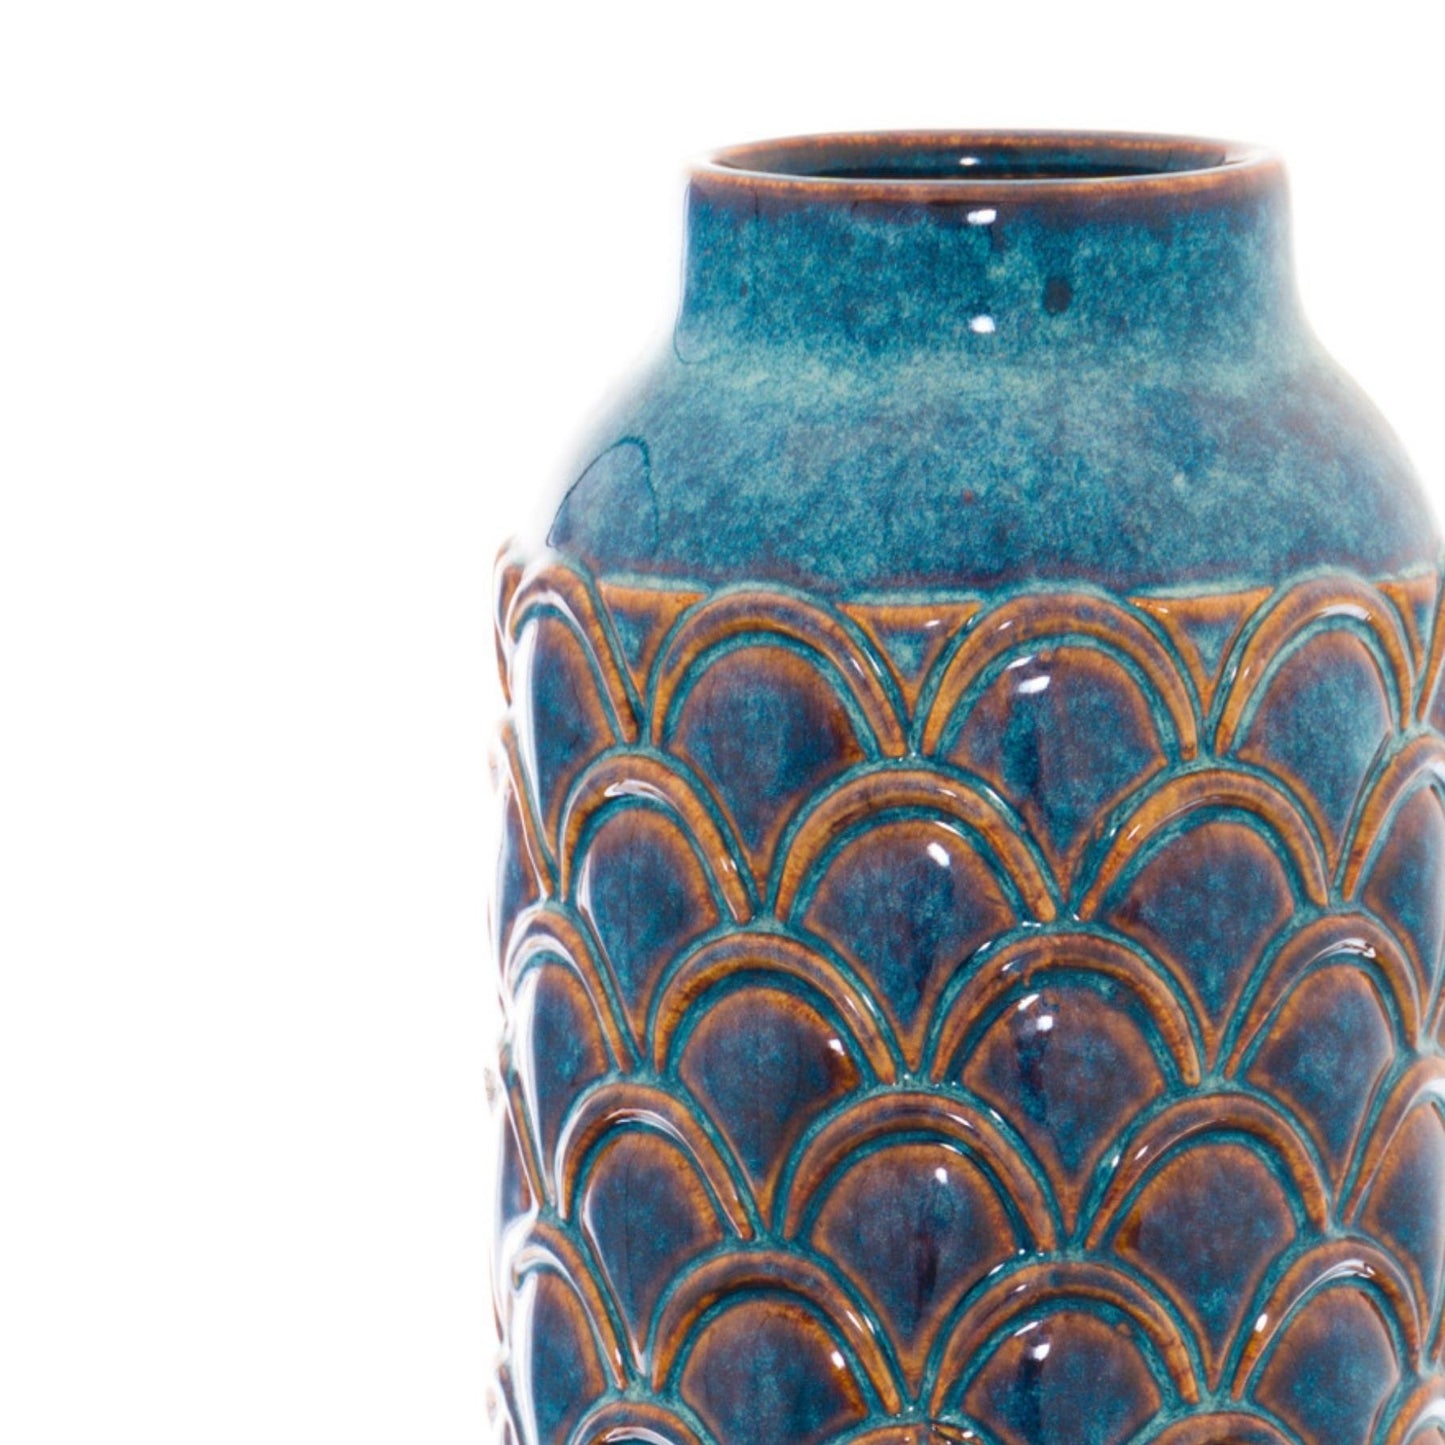 Seville Collection Large Indigo Scalloped Vase